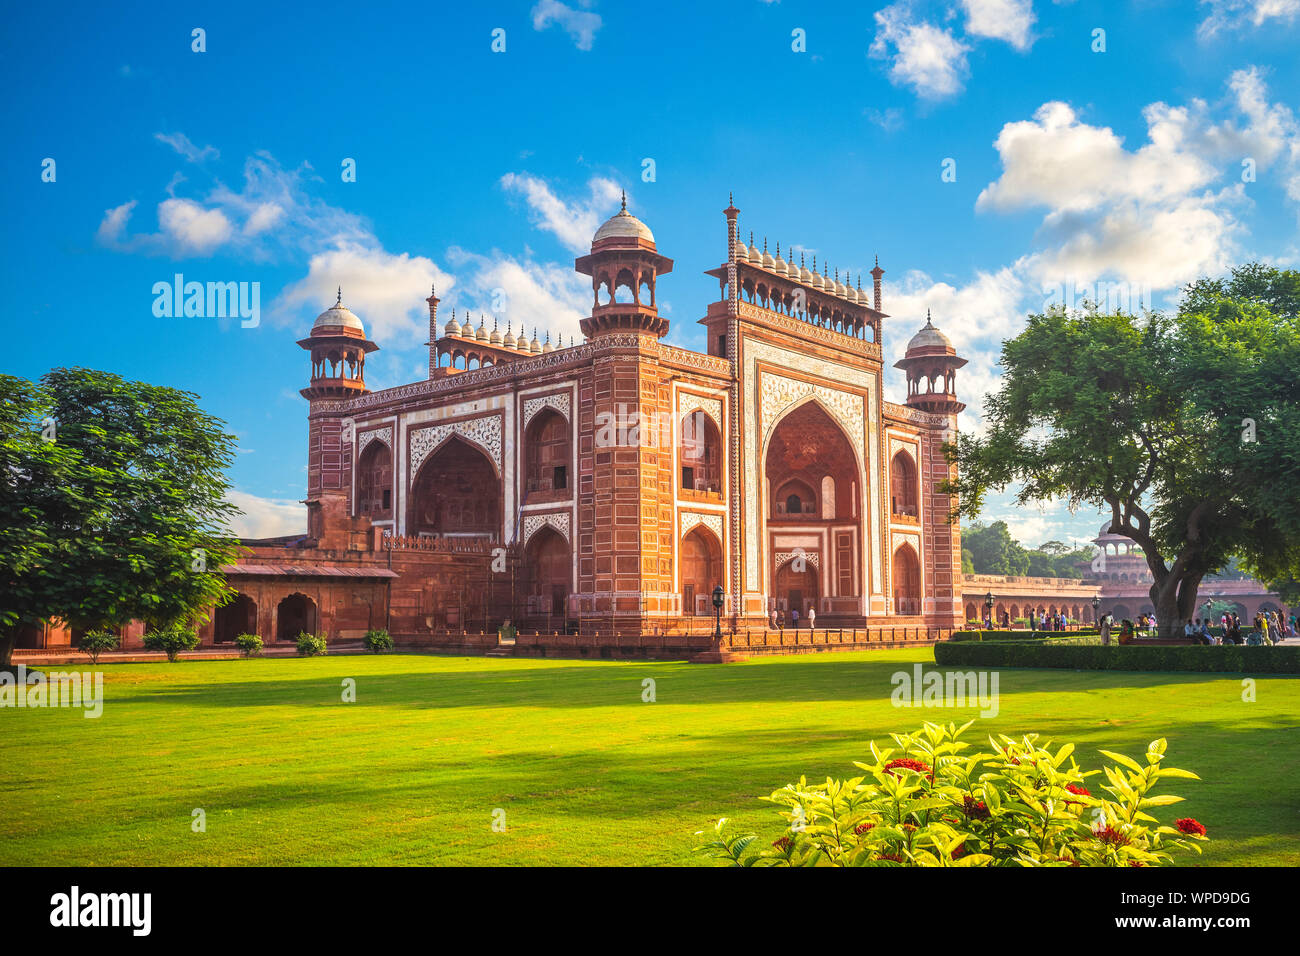 The great gate to Taj Mahal in Agra, India Stock Photo